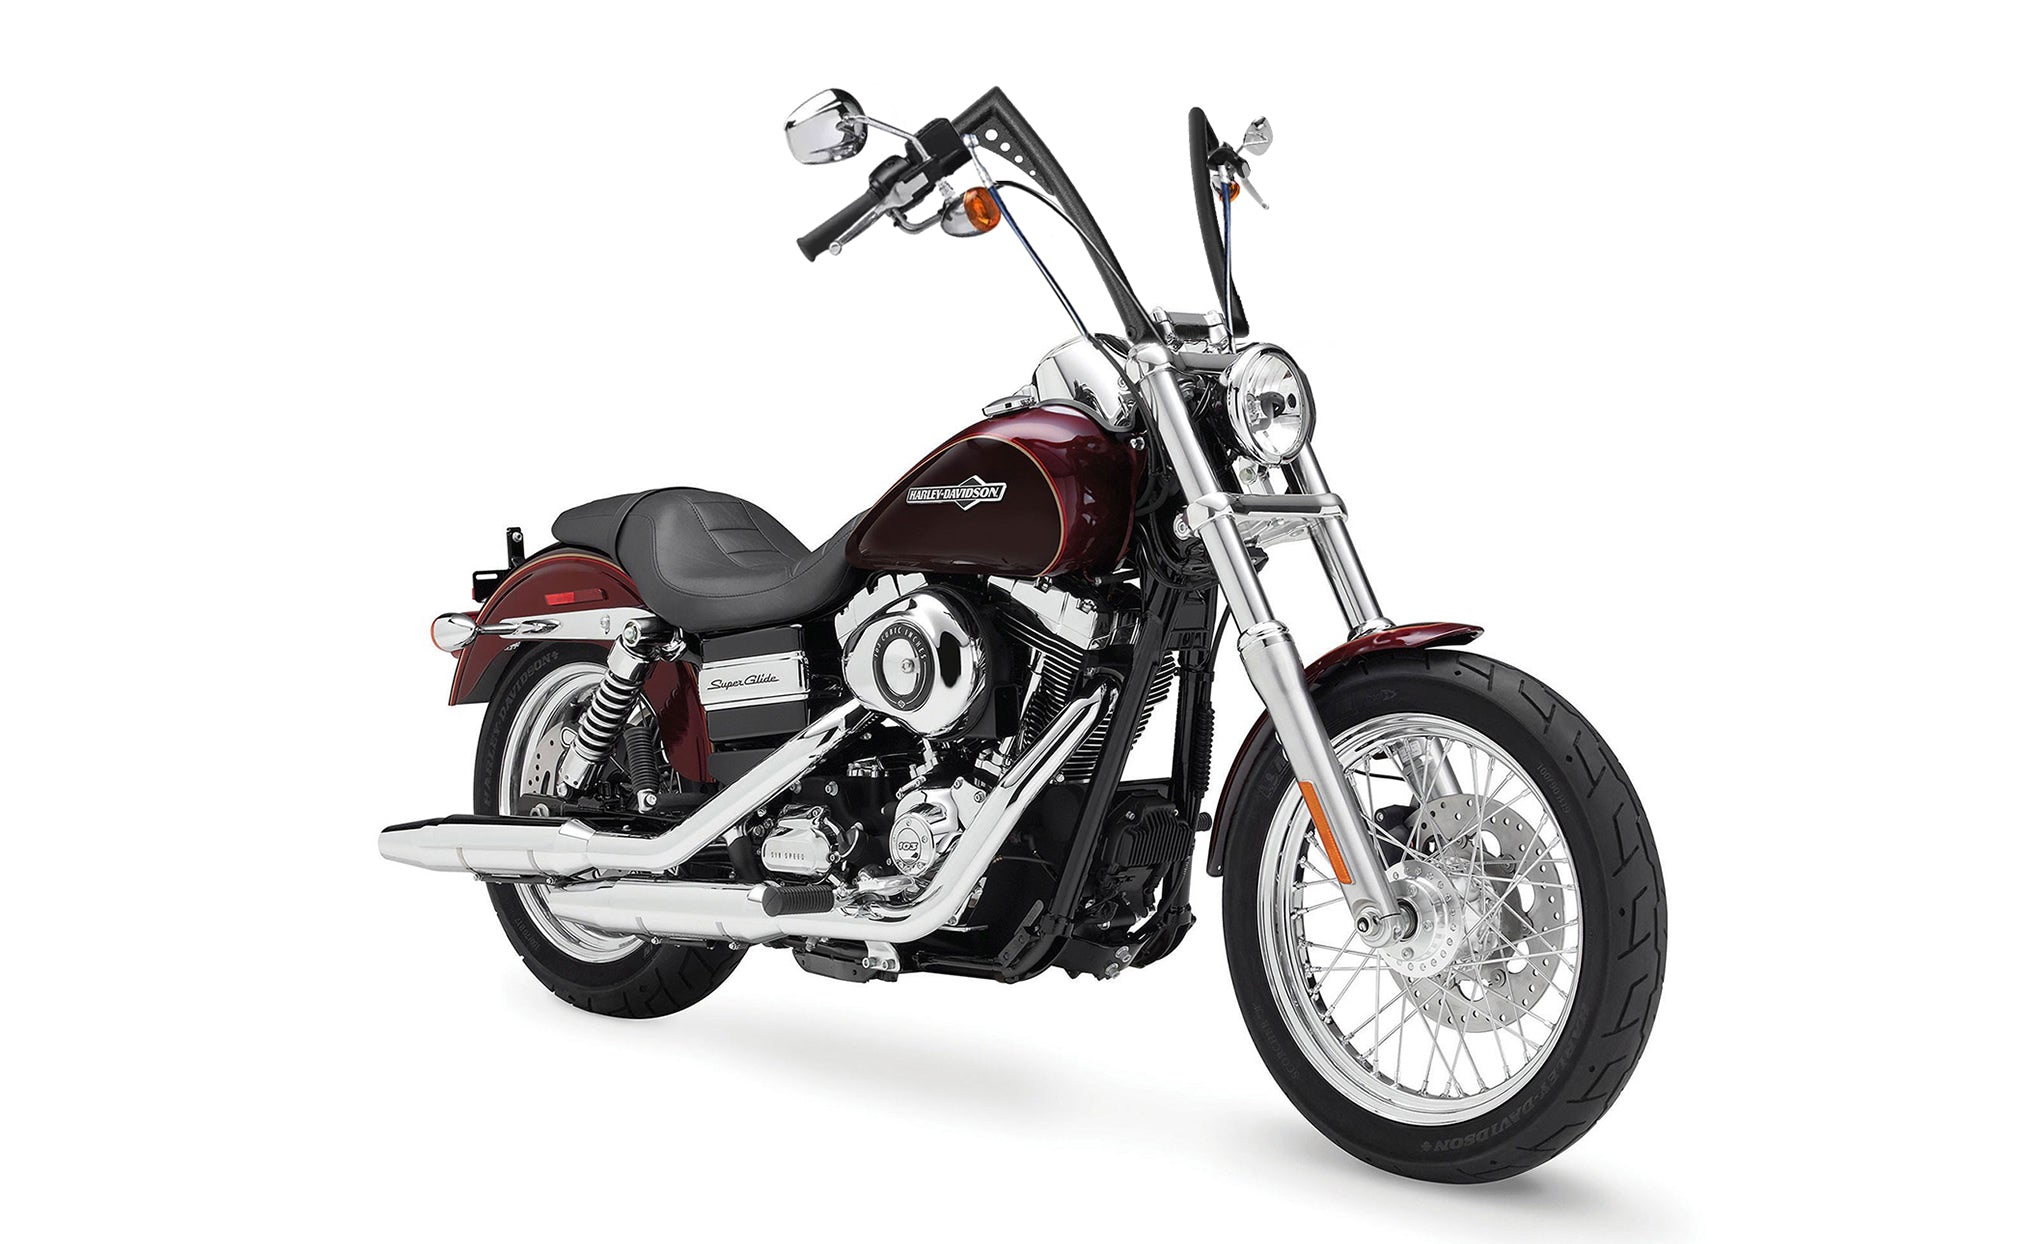 Viking Iron Born 12" Handlebar for Harley Dyna Super Glide FXD Matte Black Bag on Bike View @expand